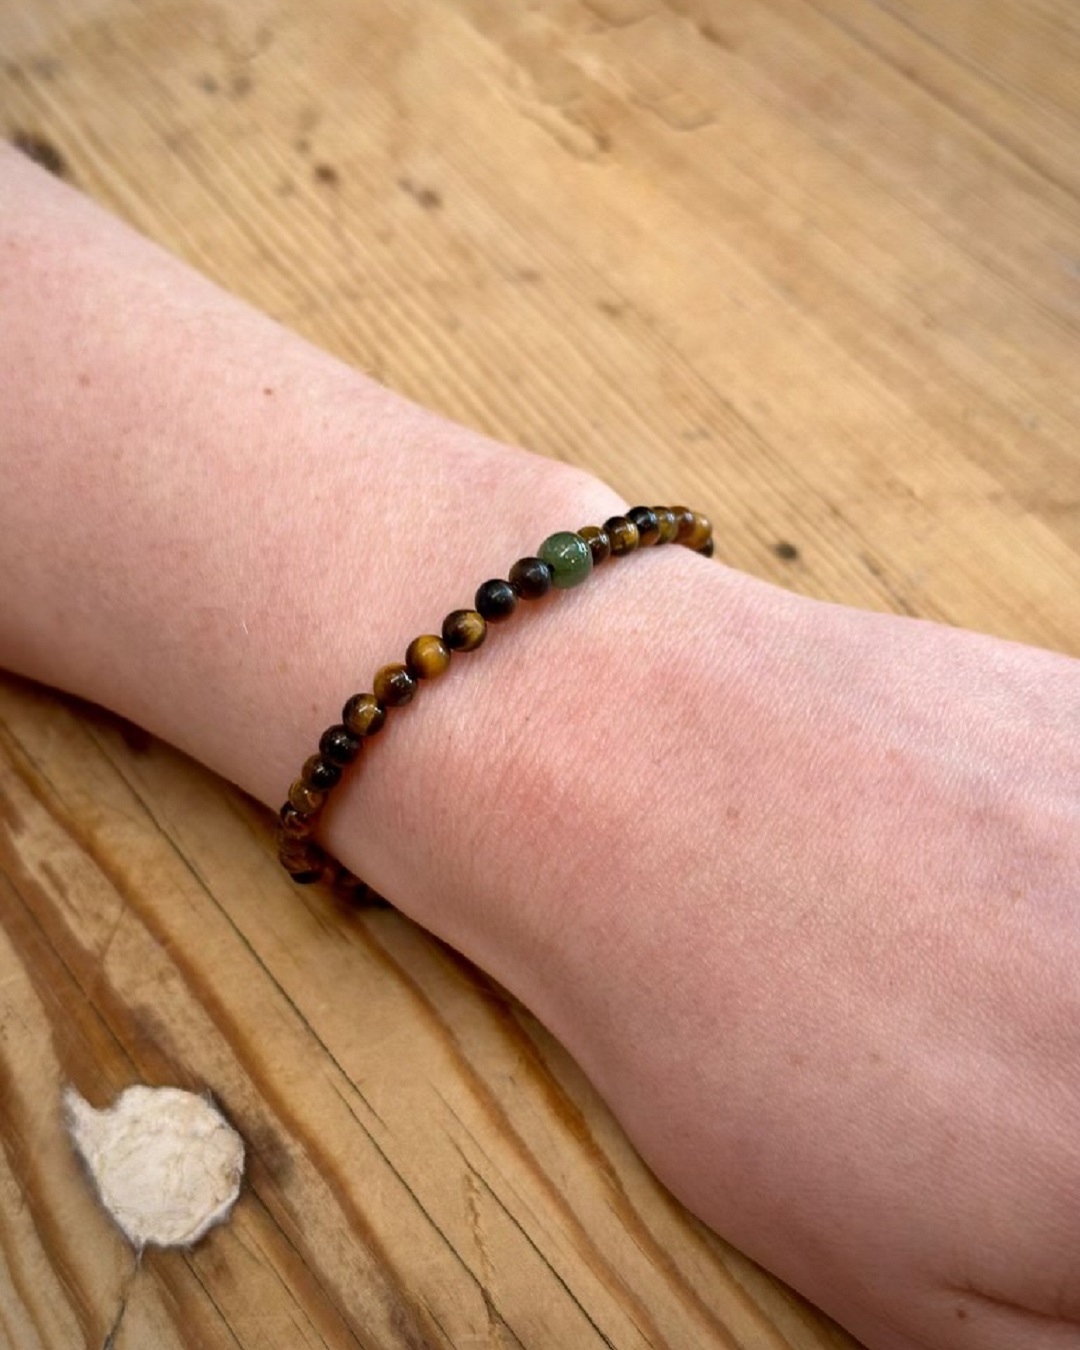 Tigers eye and greenstone gems bracelet on wrist